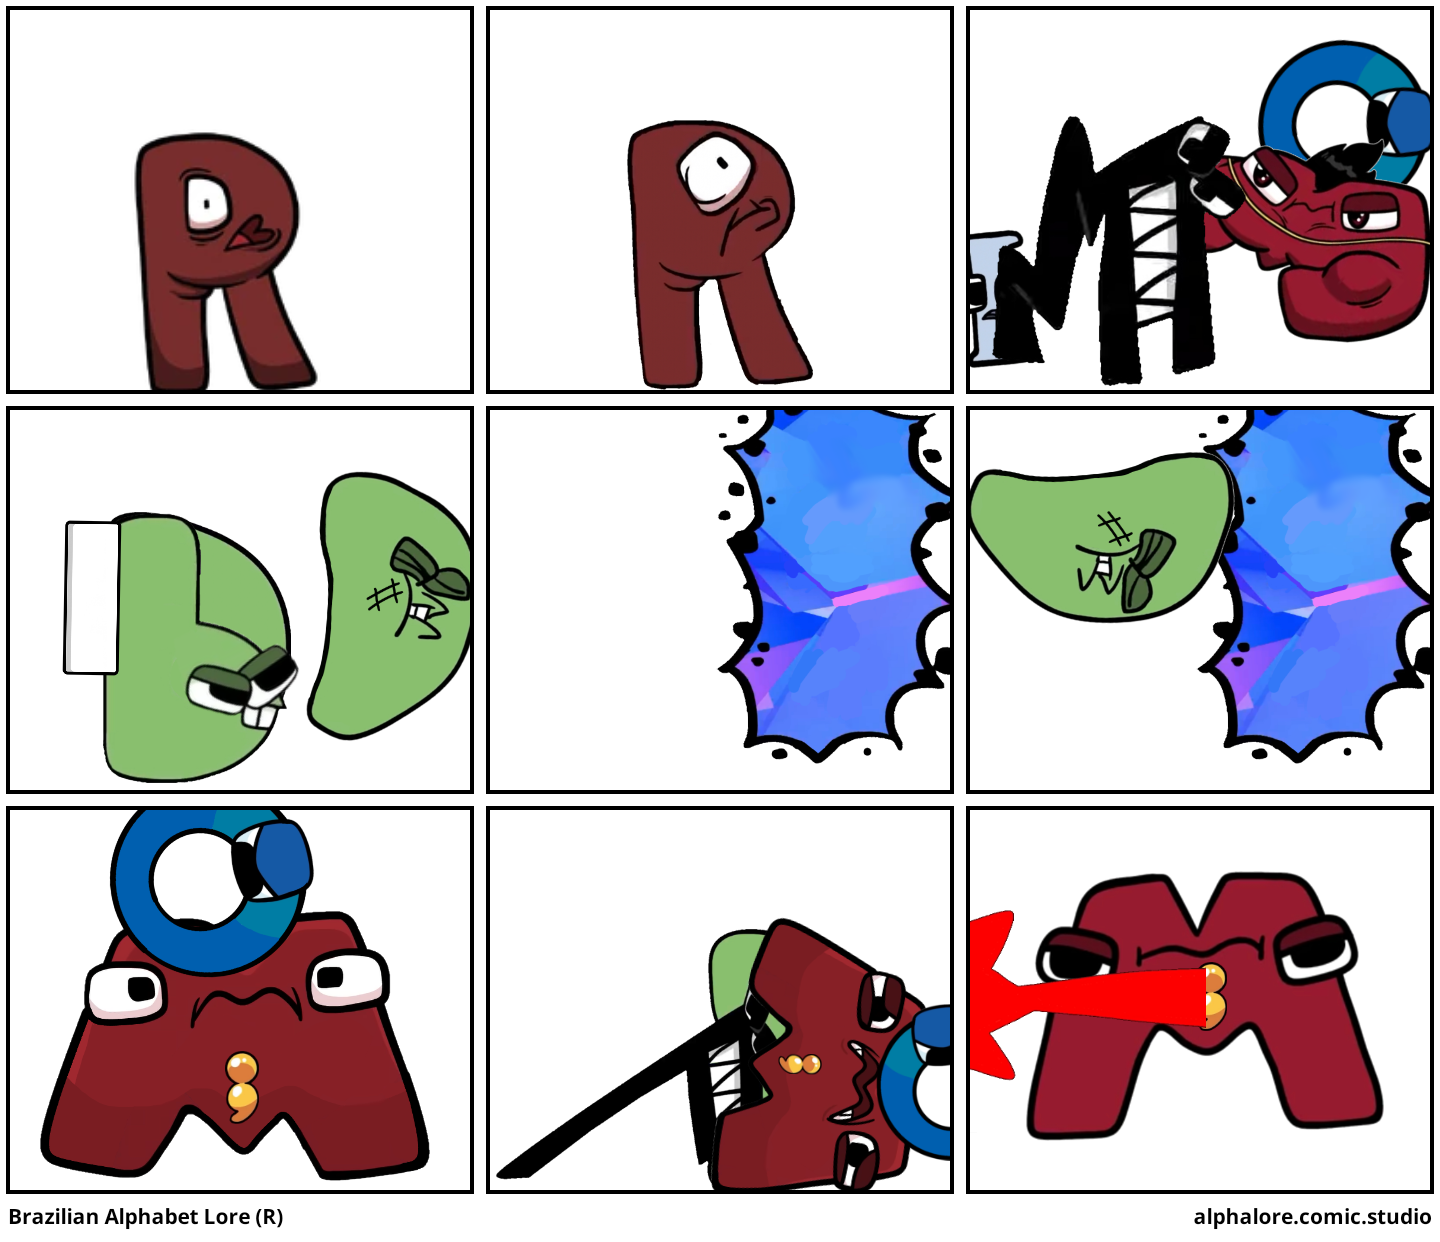 Brazilian Alphabet Lore (R) - Comic Studio